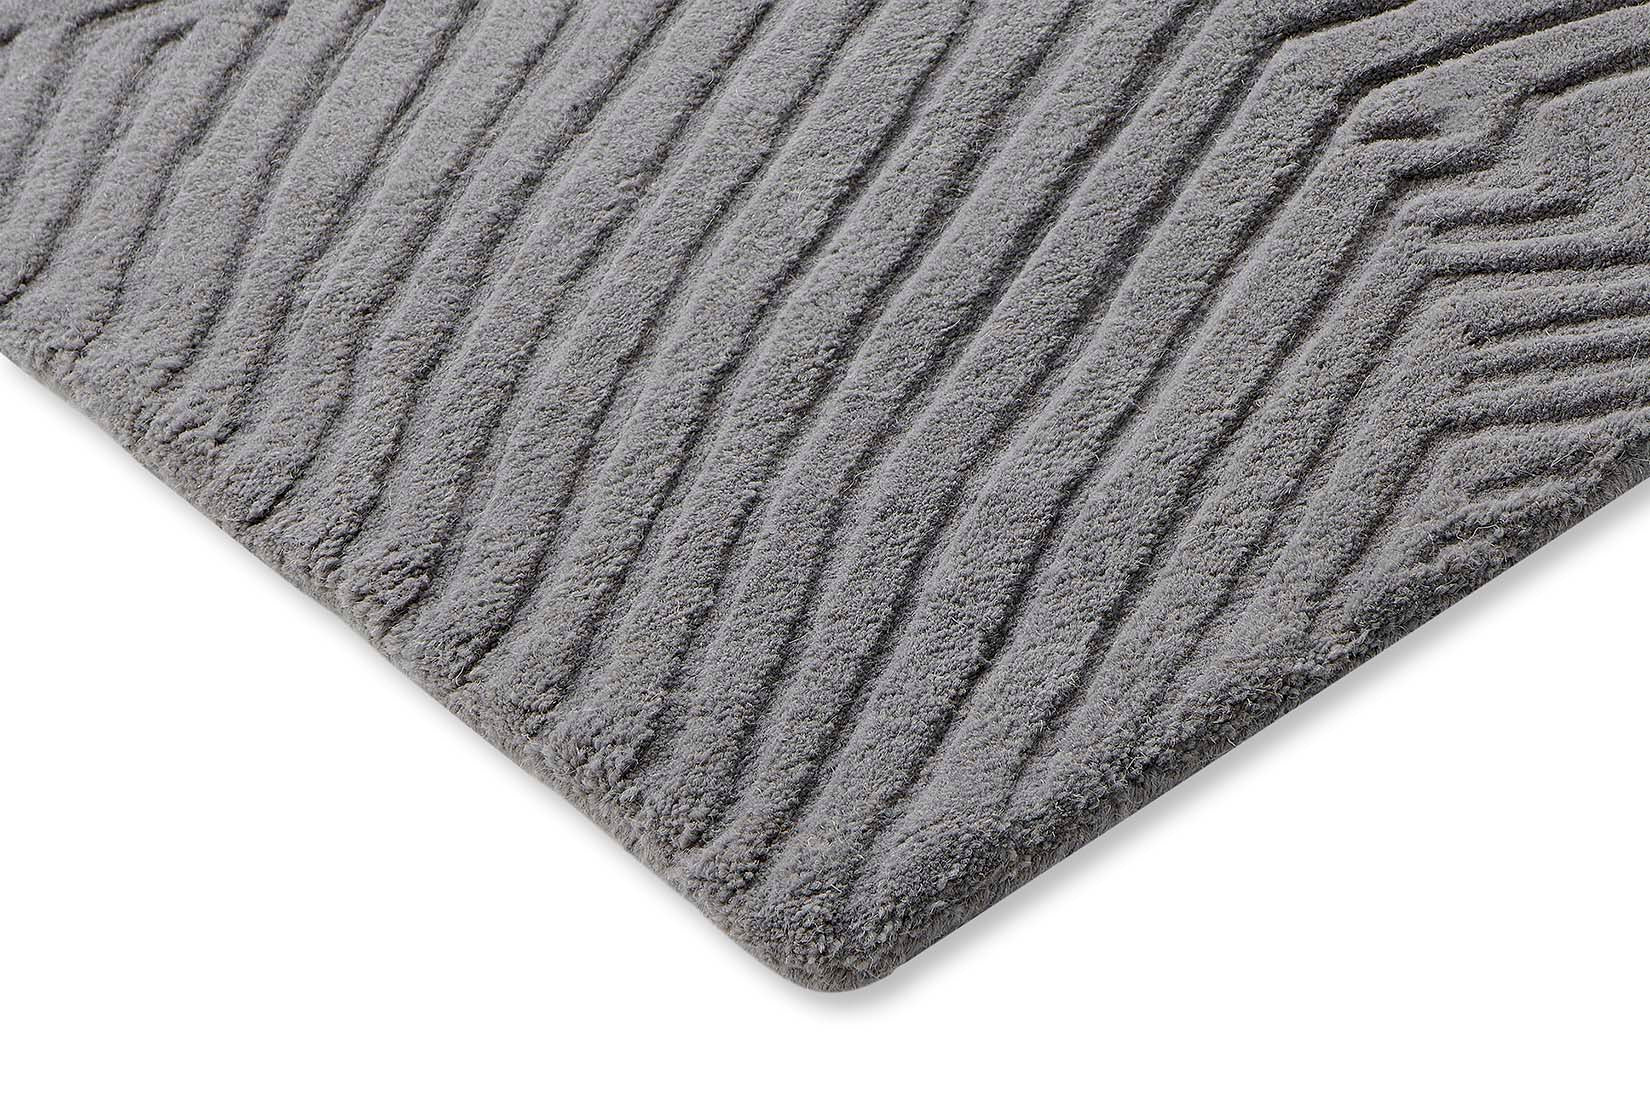 Rectangular grey rug with engraved leaf pattern
